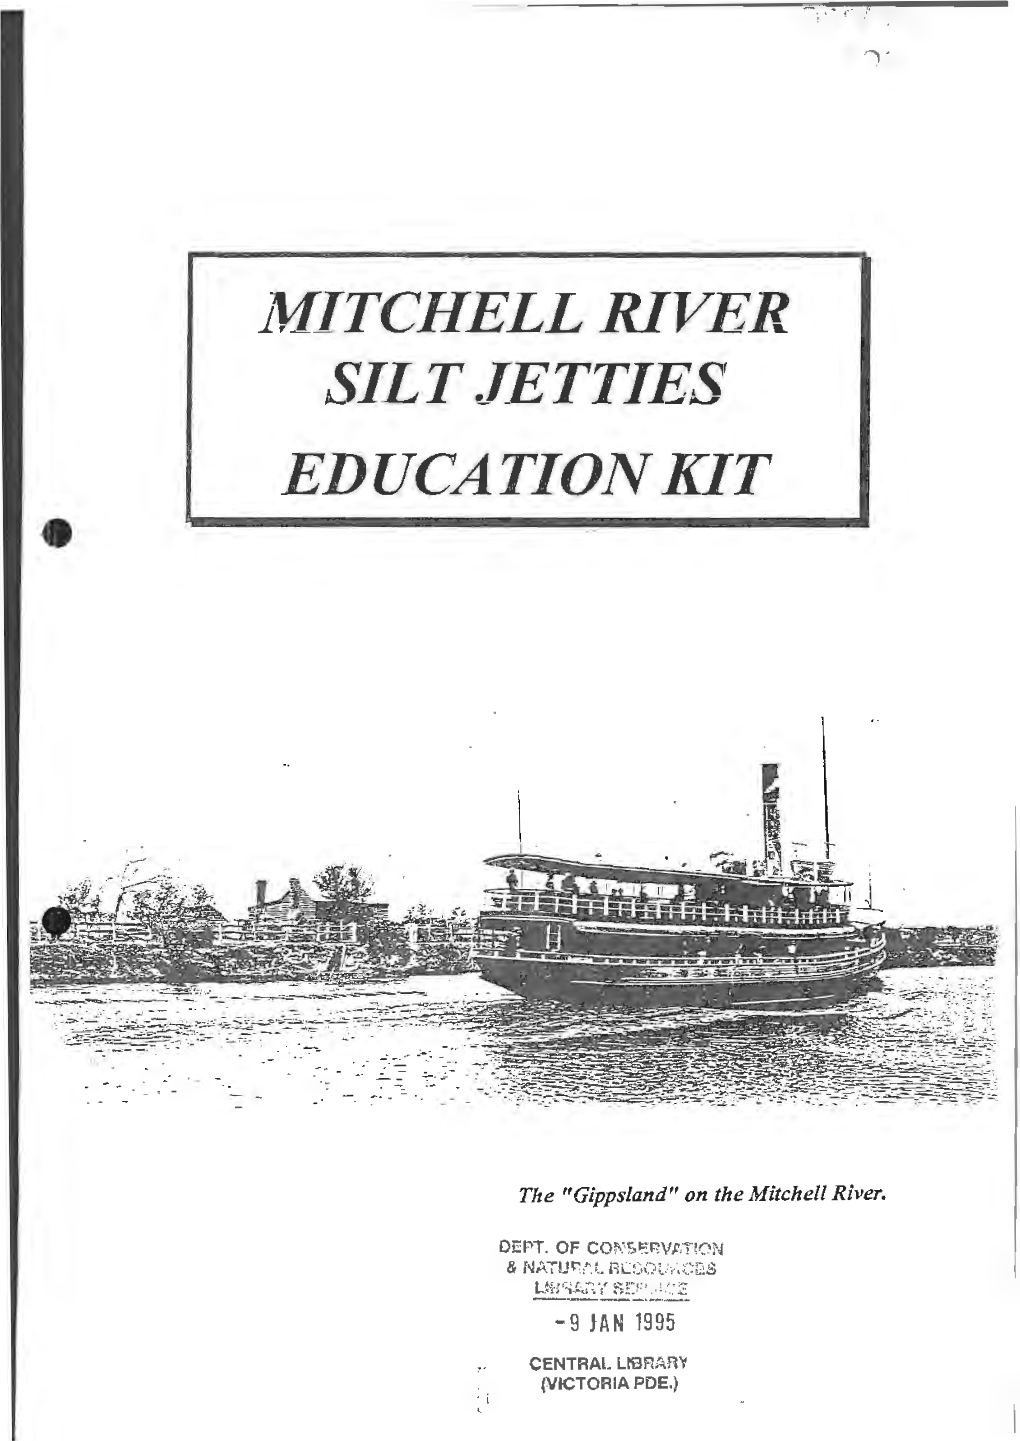 Jlf Ltchell RIVER SILT .TETTIES EDUCATION KIT